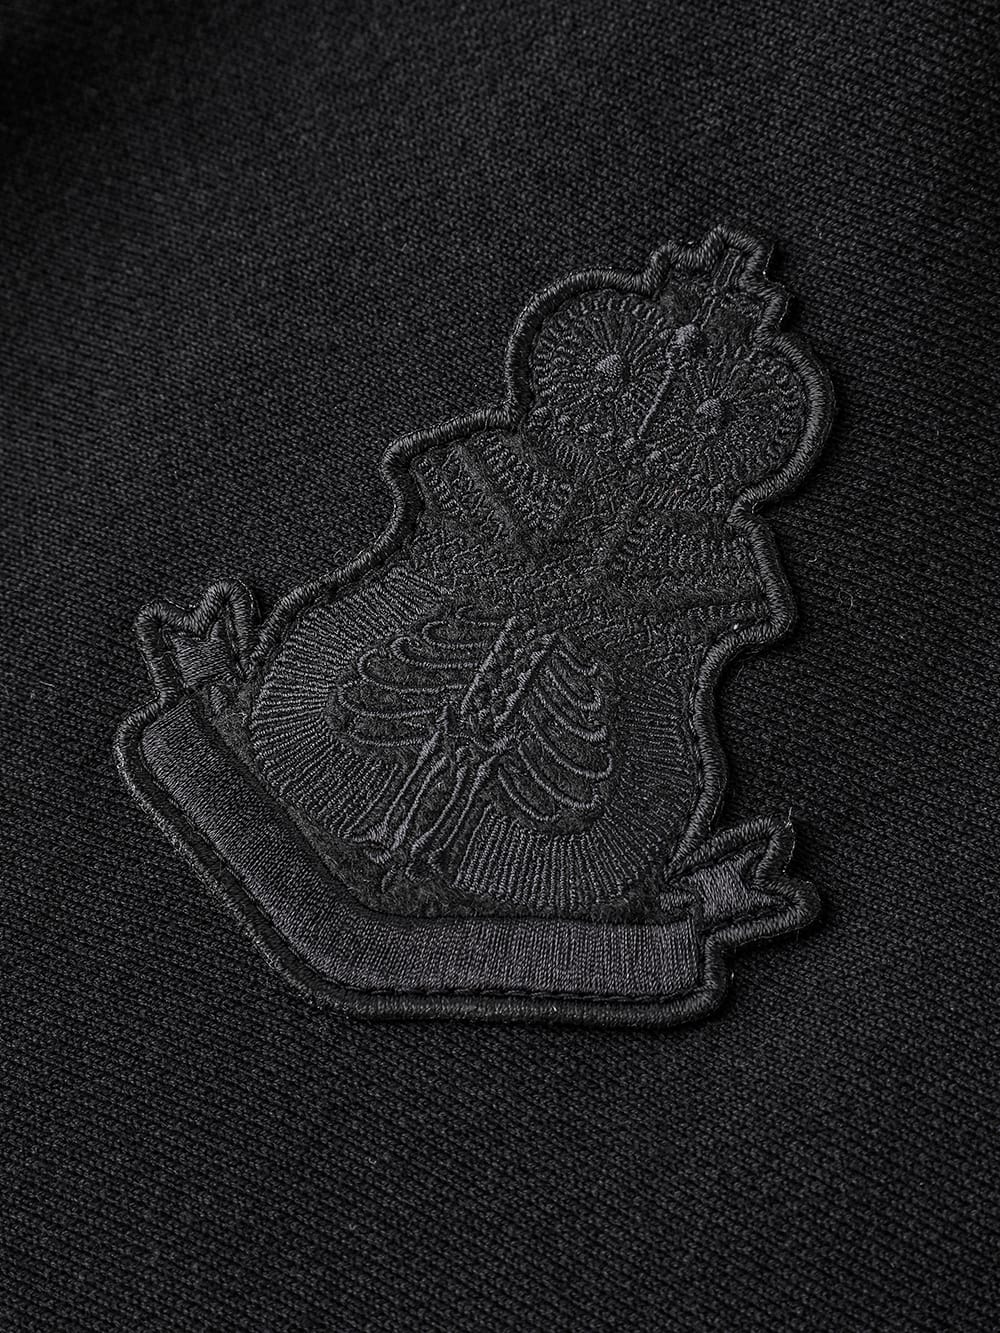 S logo and bone emblem. (oversized hoodie)